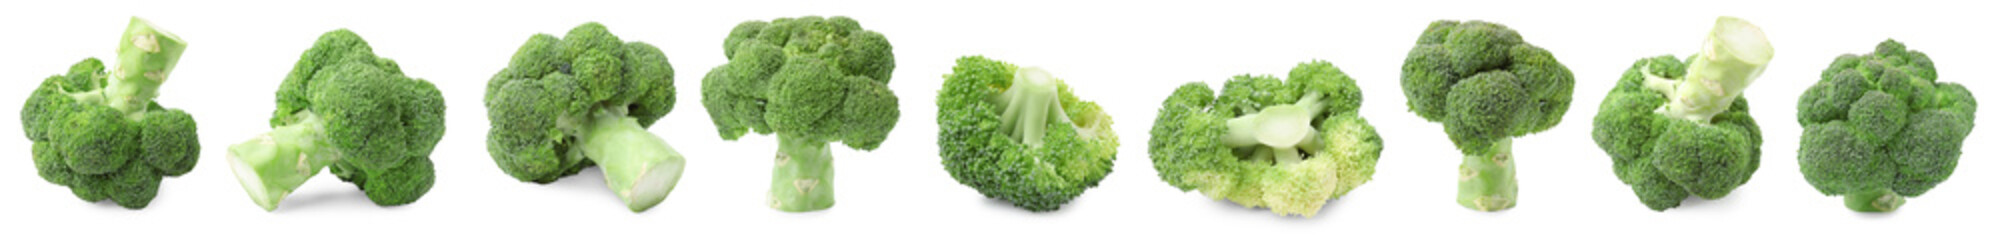 Fresh green broccoli isolated on white, set